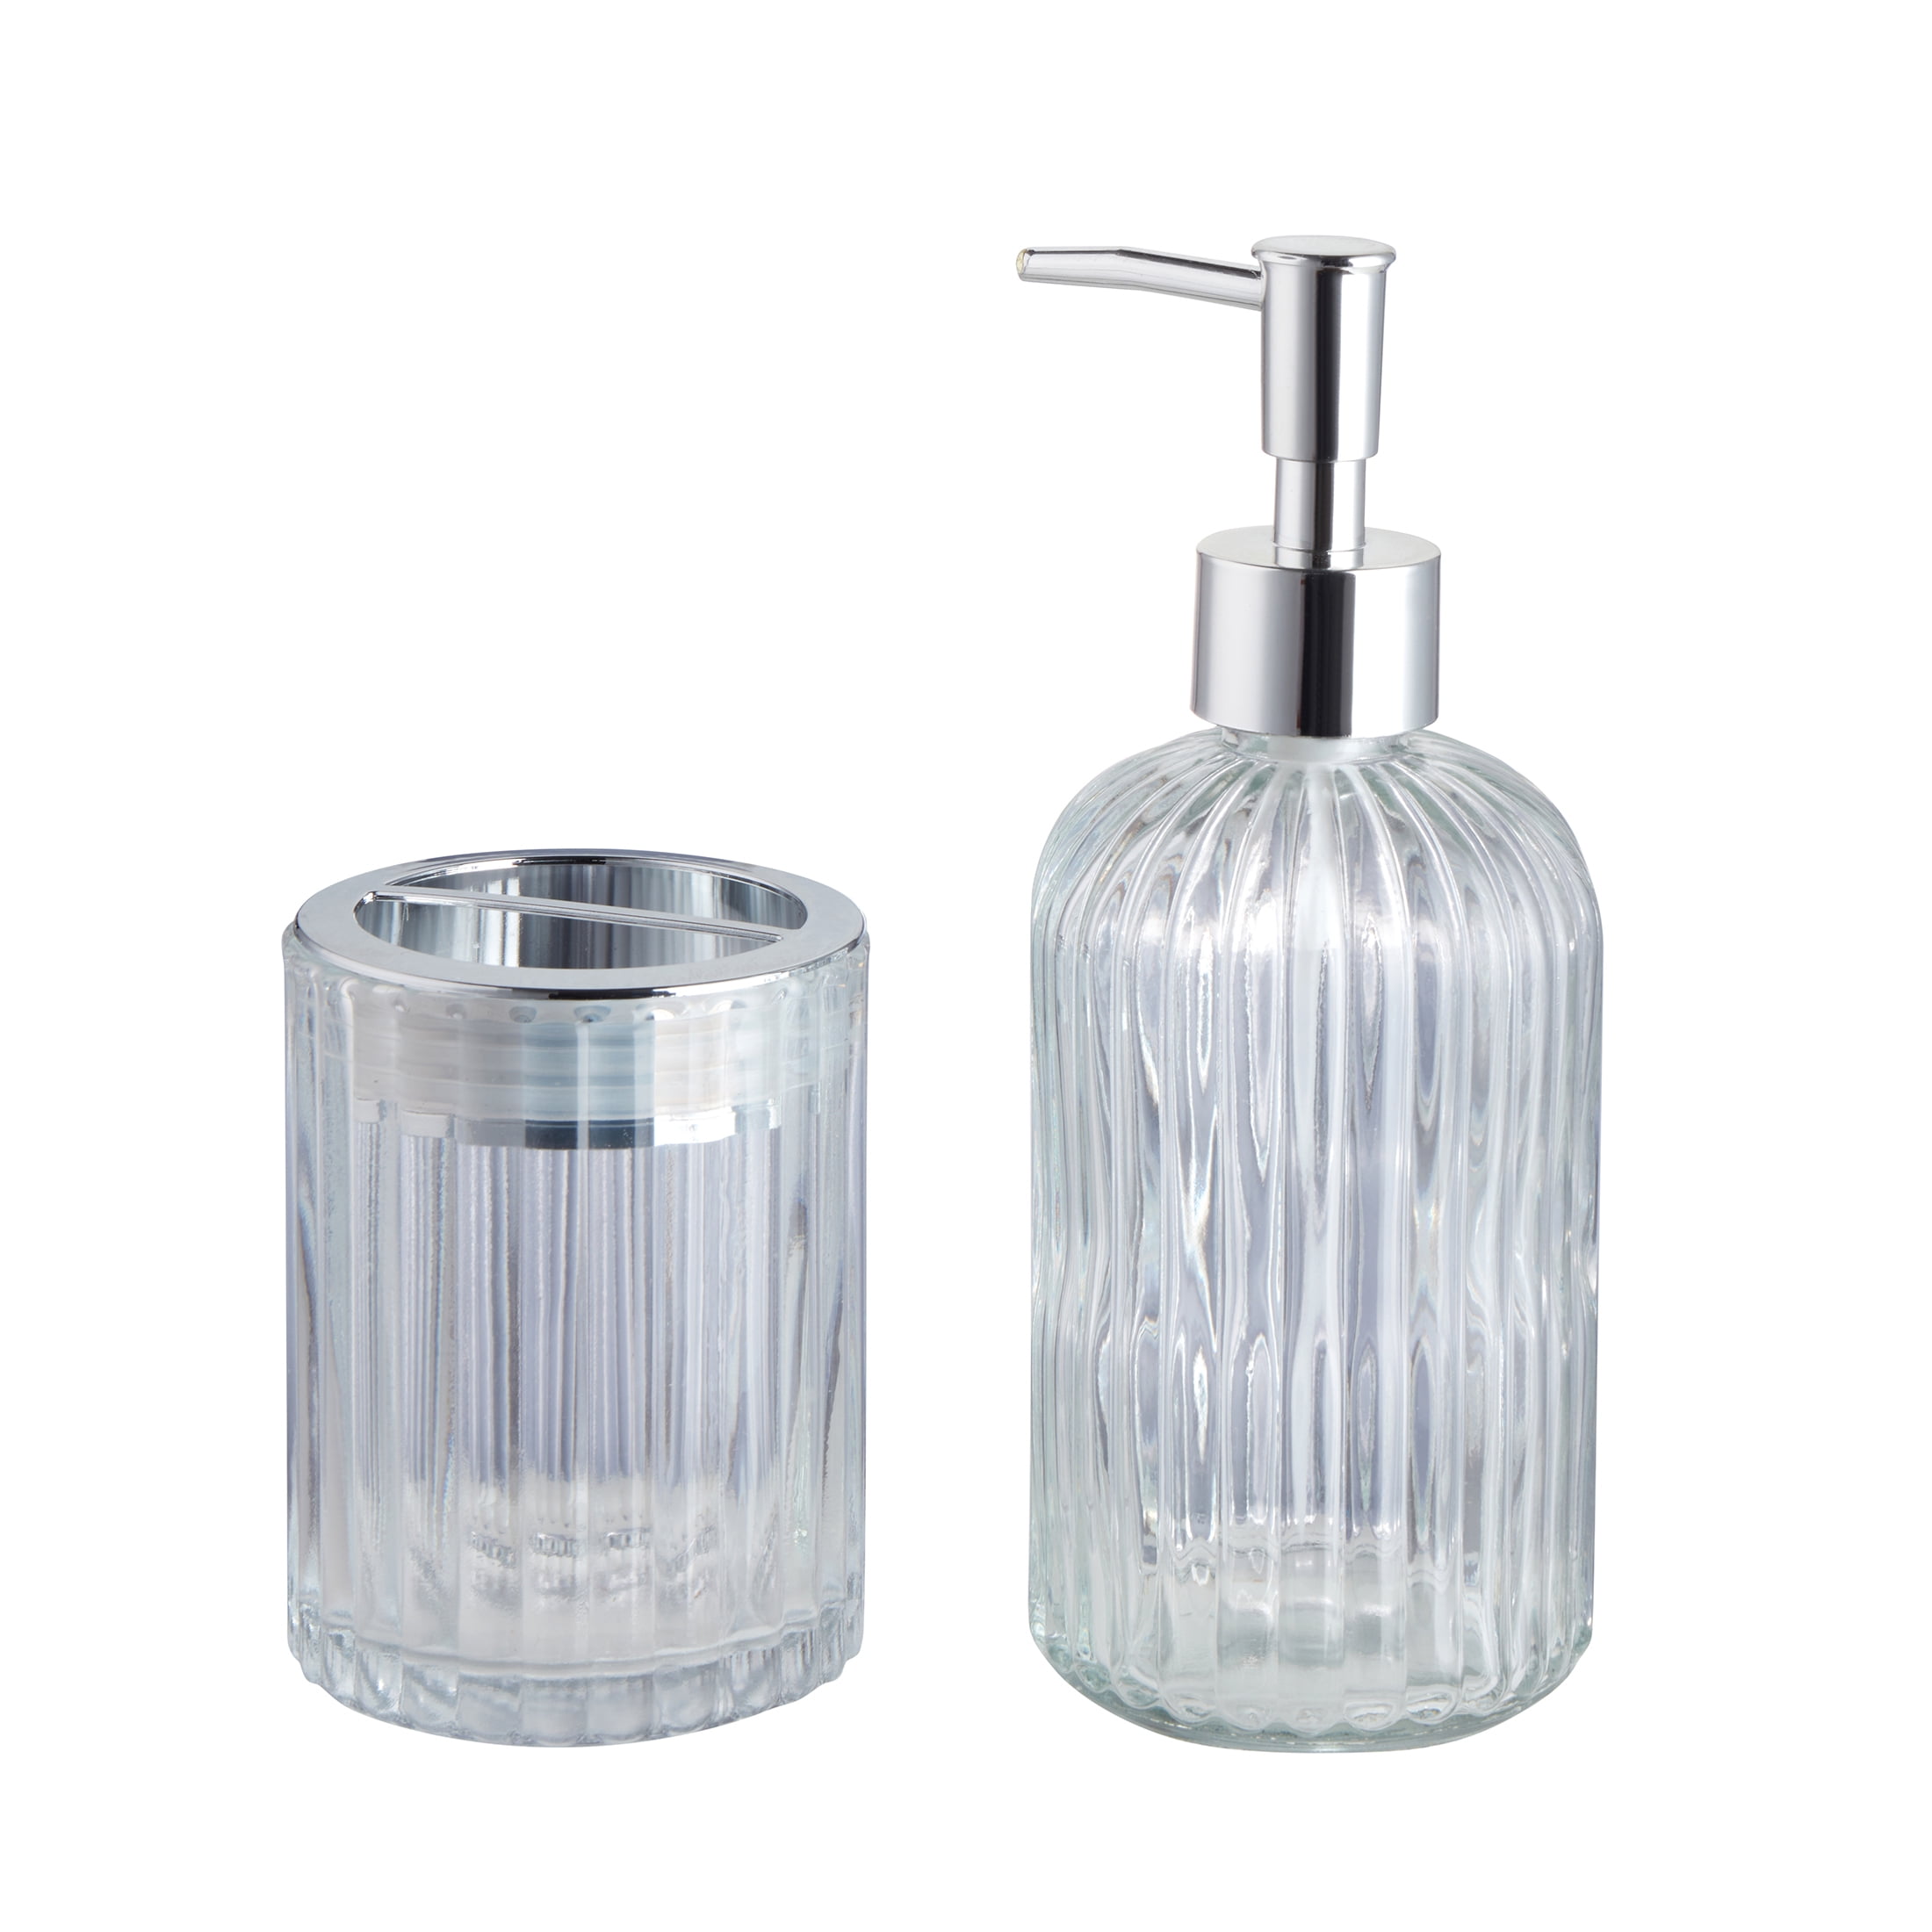 CLEAR GLASS SOAP DISPENSER  Zara Home United States of America